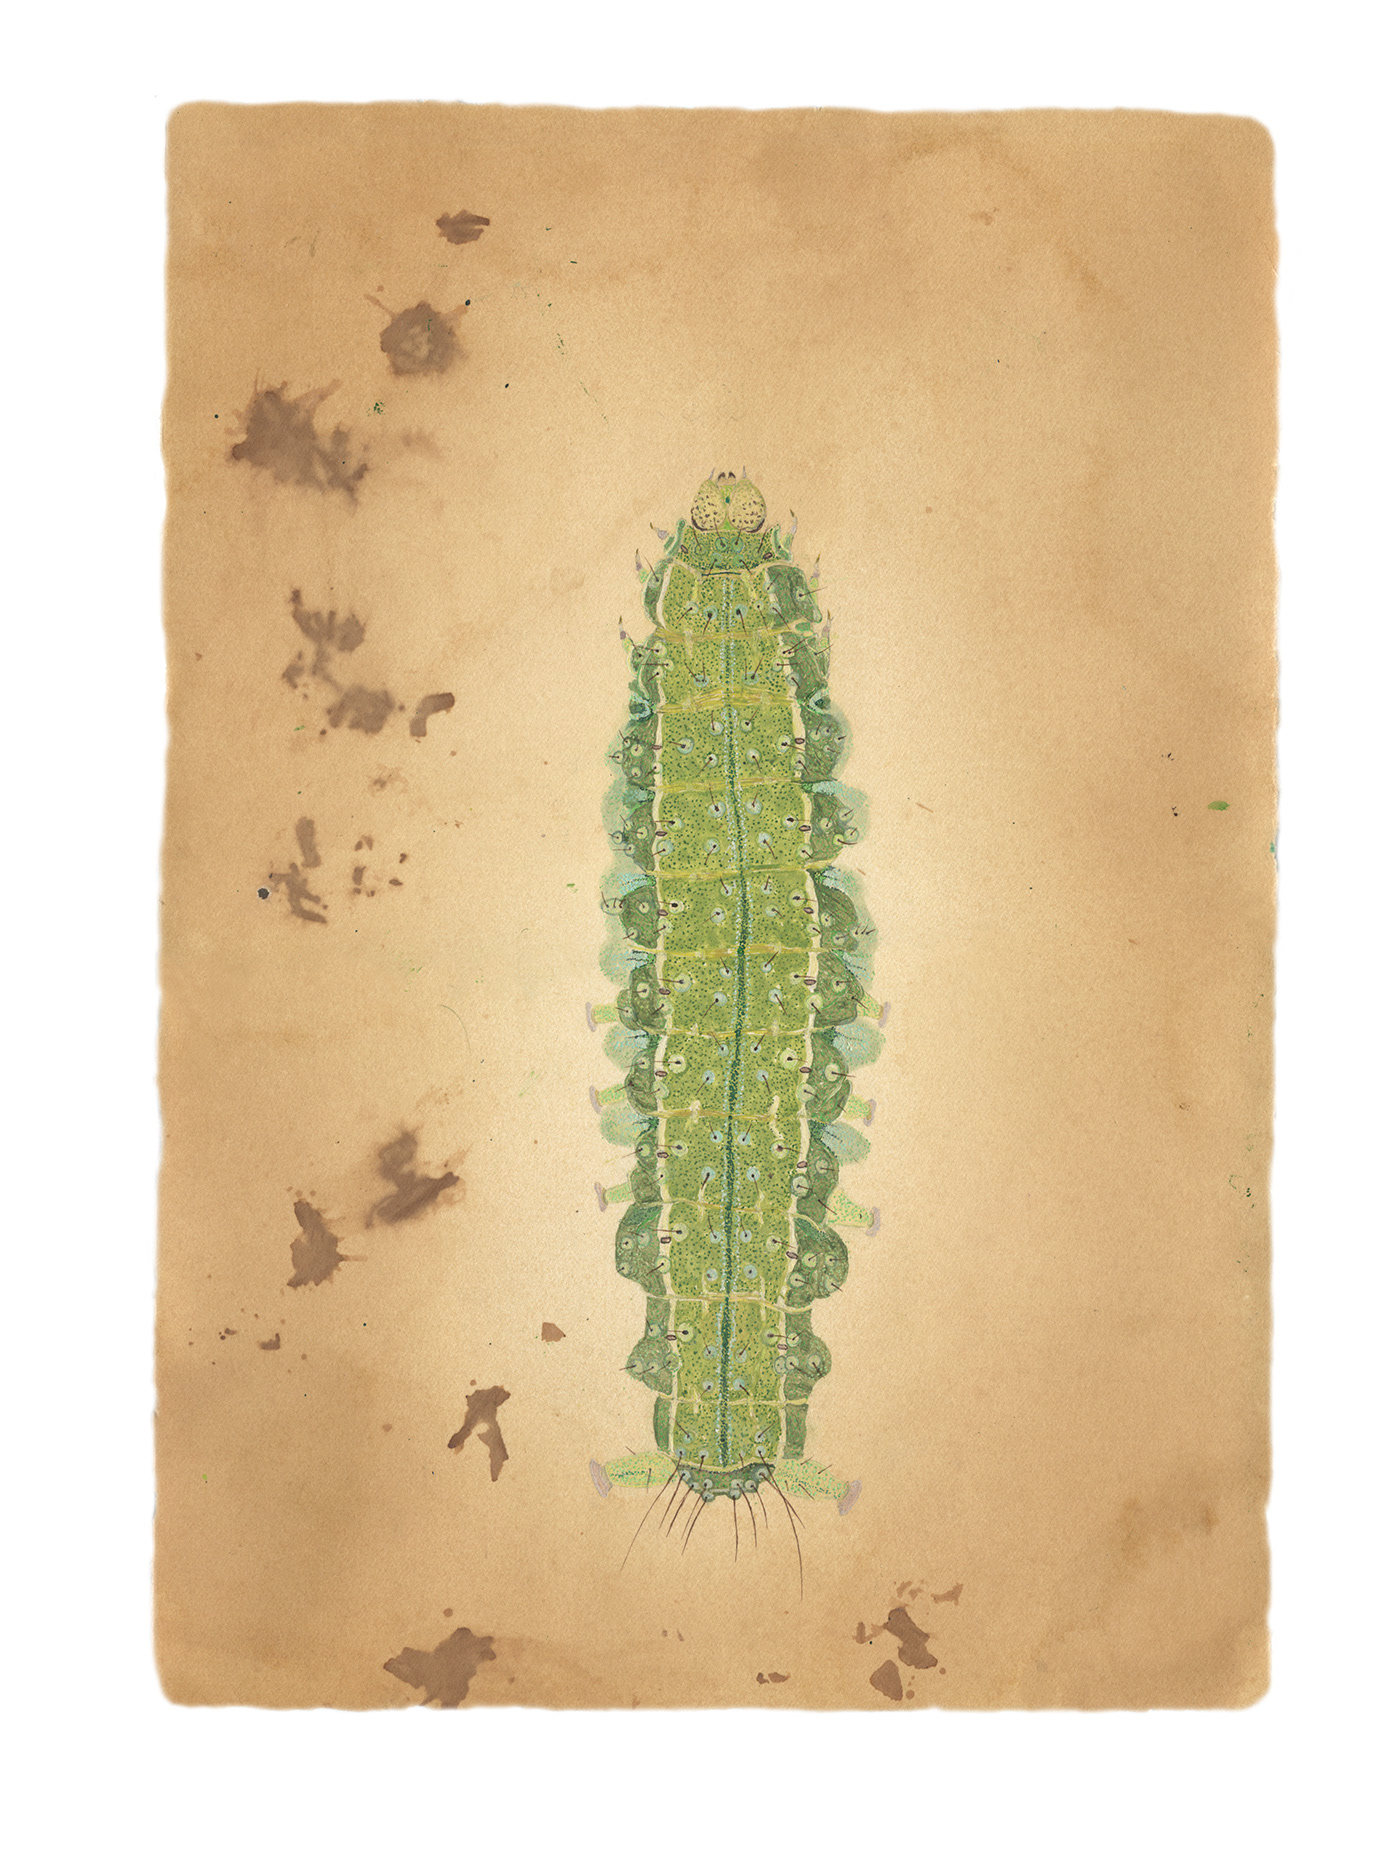 Caterpillar insect miniaturepainting Pointillism naturalhistoryillustration NatureLover observation delicate japan Drawing 